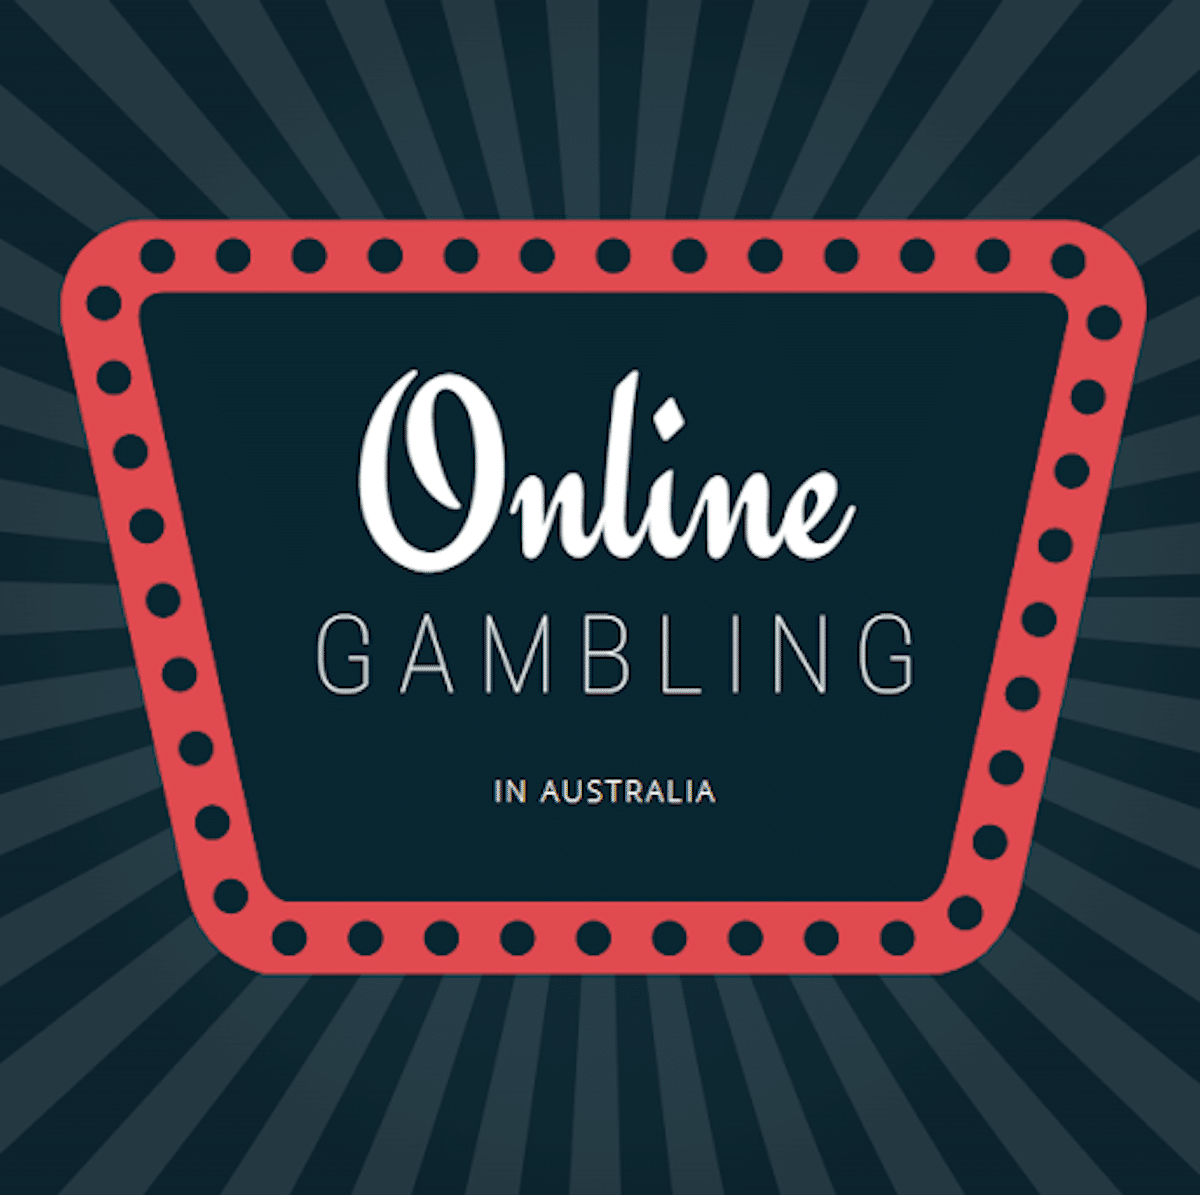 Gambling Australians